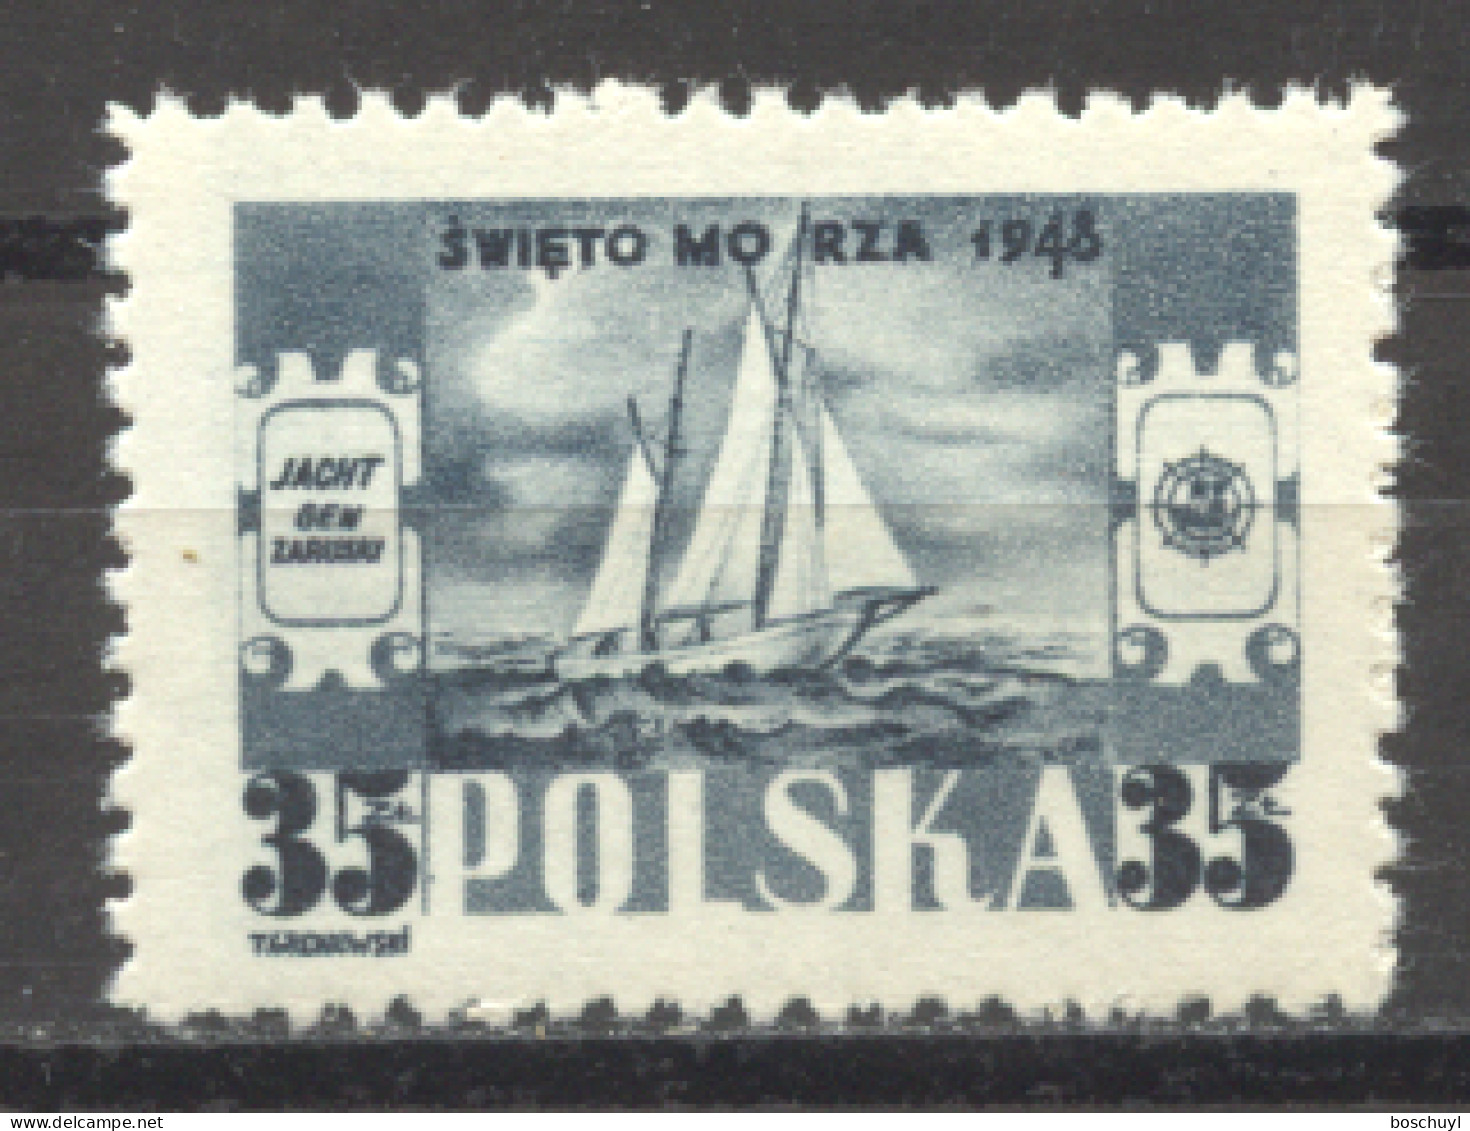 Poland, 1948, Day Of The Sea, Sailing Boat, Ship, MNH, Michel 492 - Ongebruikt